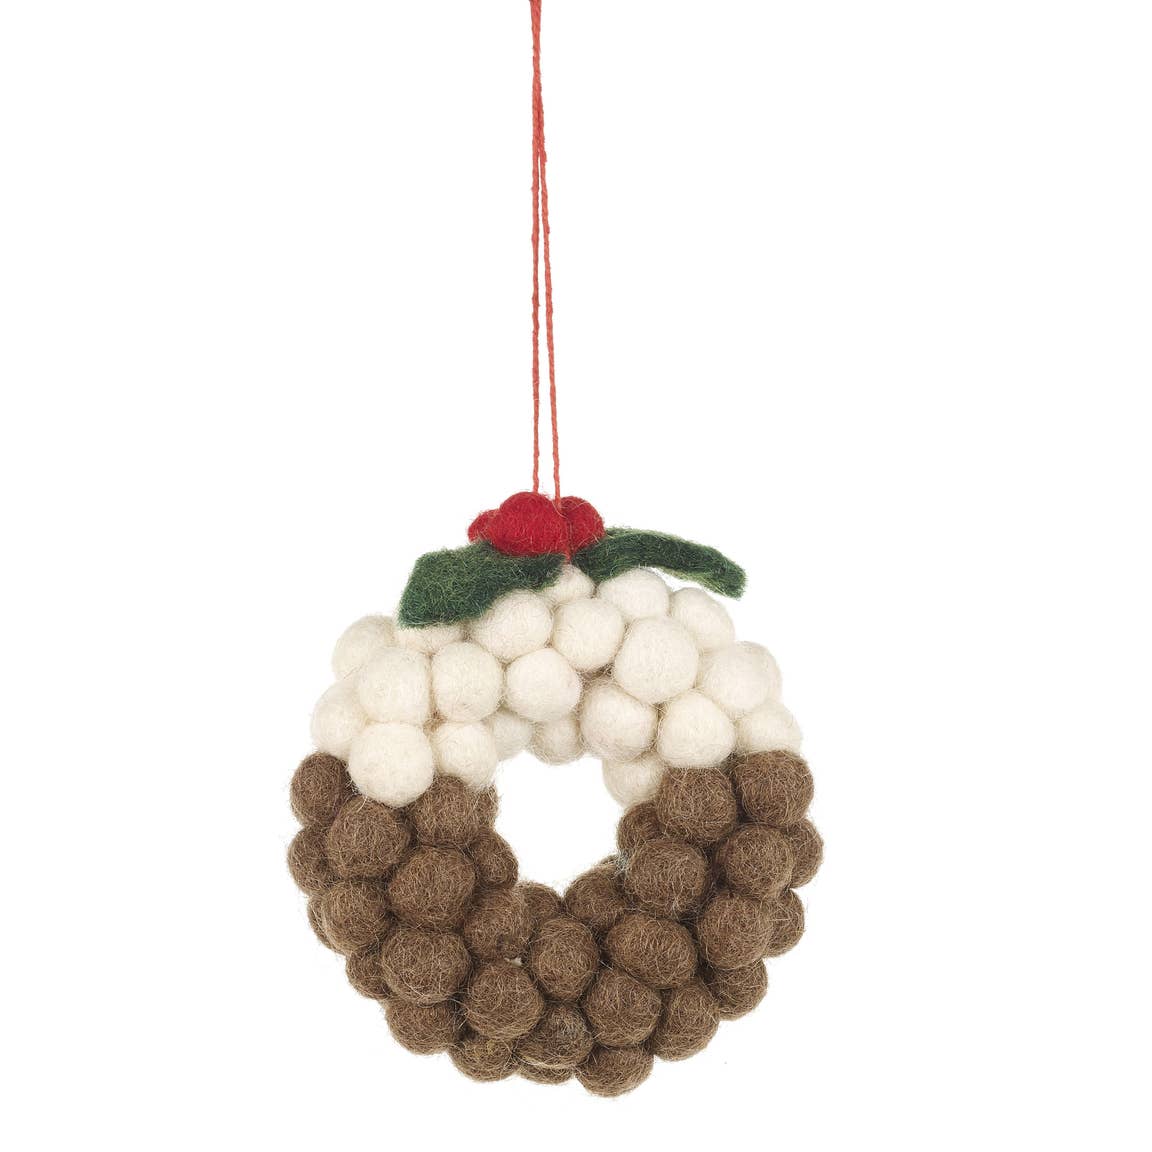 Handmade Needle Felt Hanging Christmas Decoration - Mini Christmas Pudding Wreath